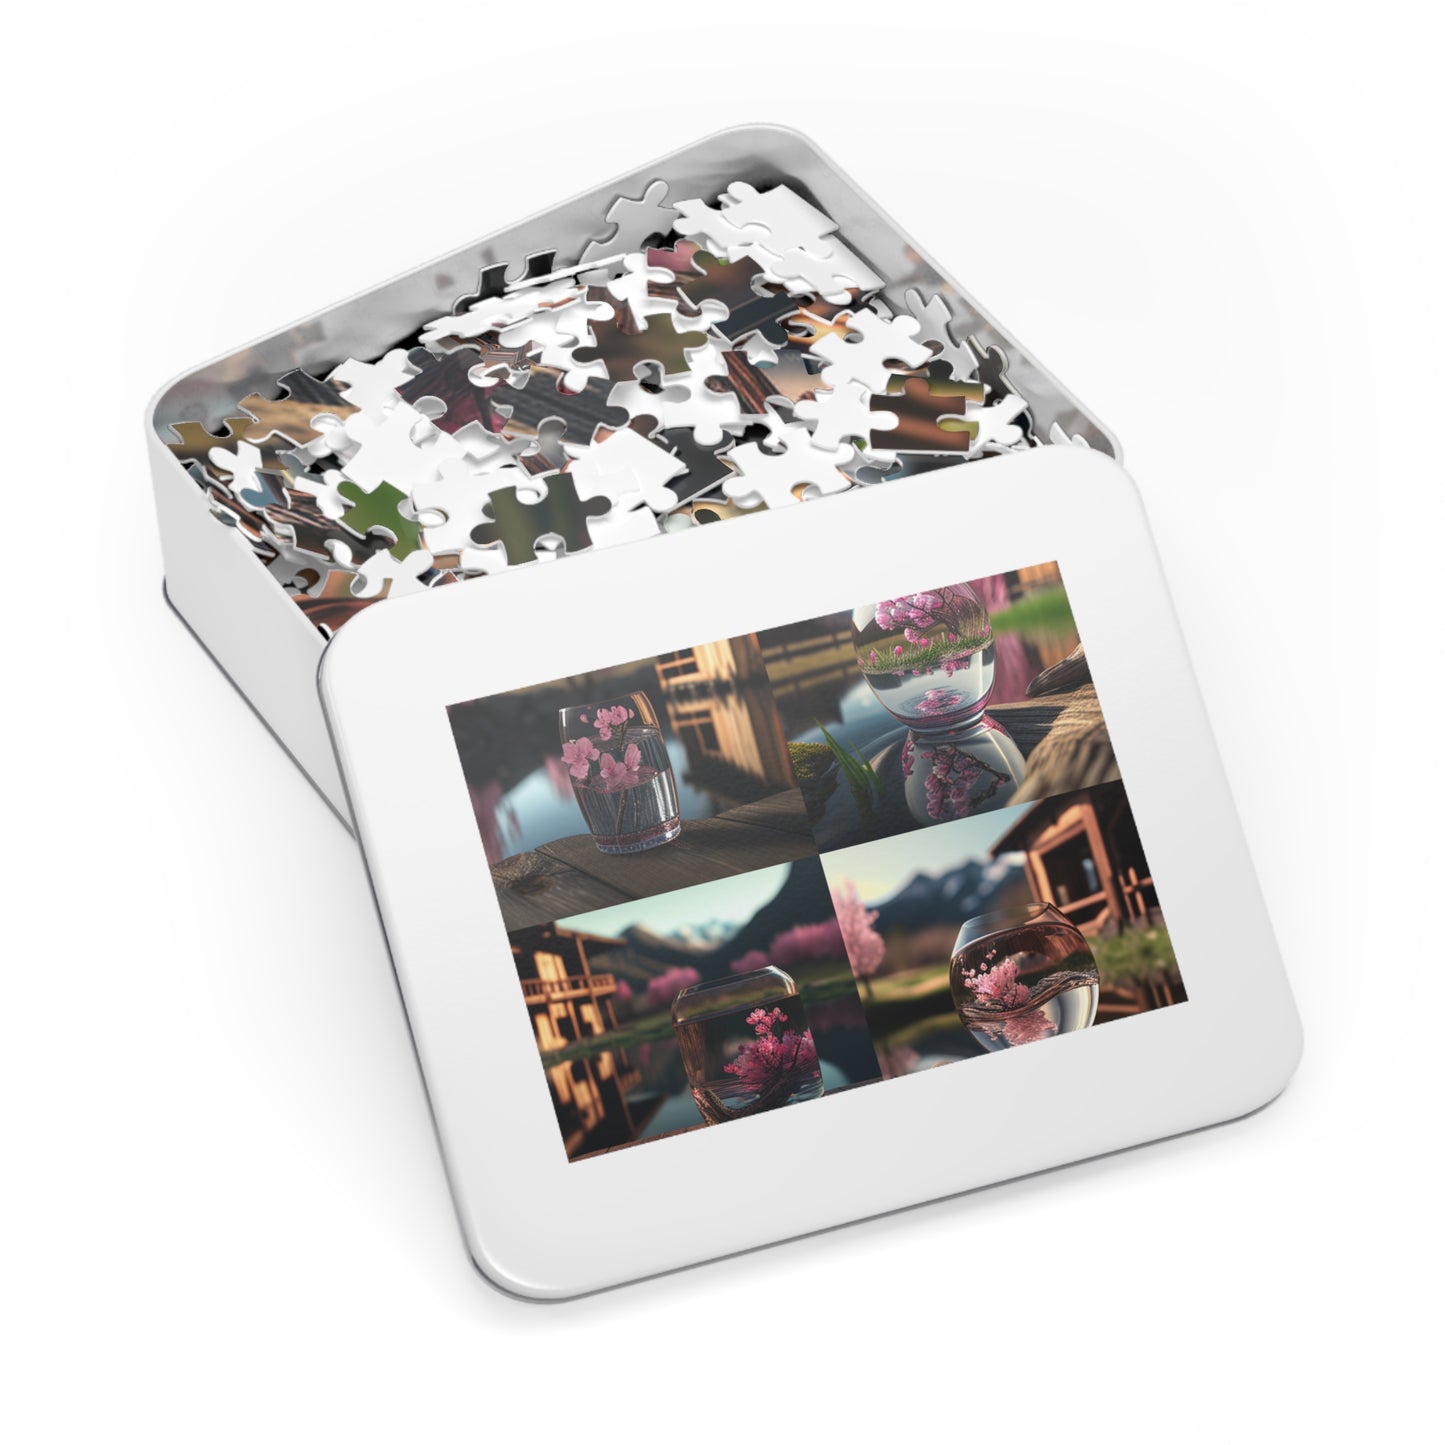 Jigsaw Puzzle (30, 110, 252, 500,1000-Piece) Cherry Blossom 5